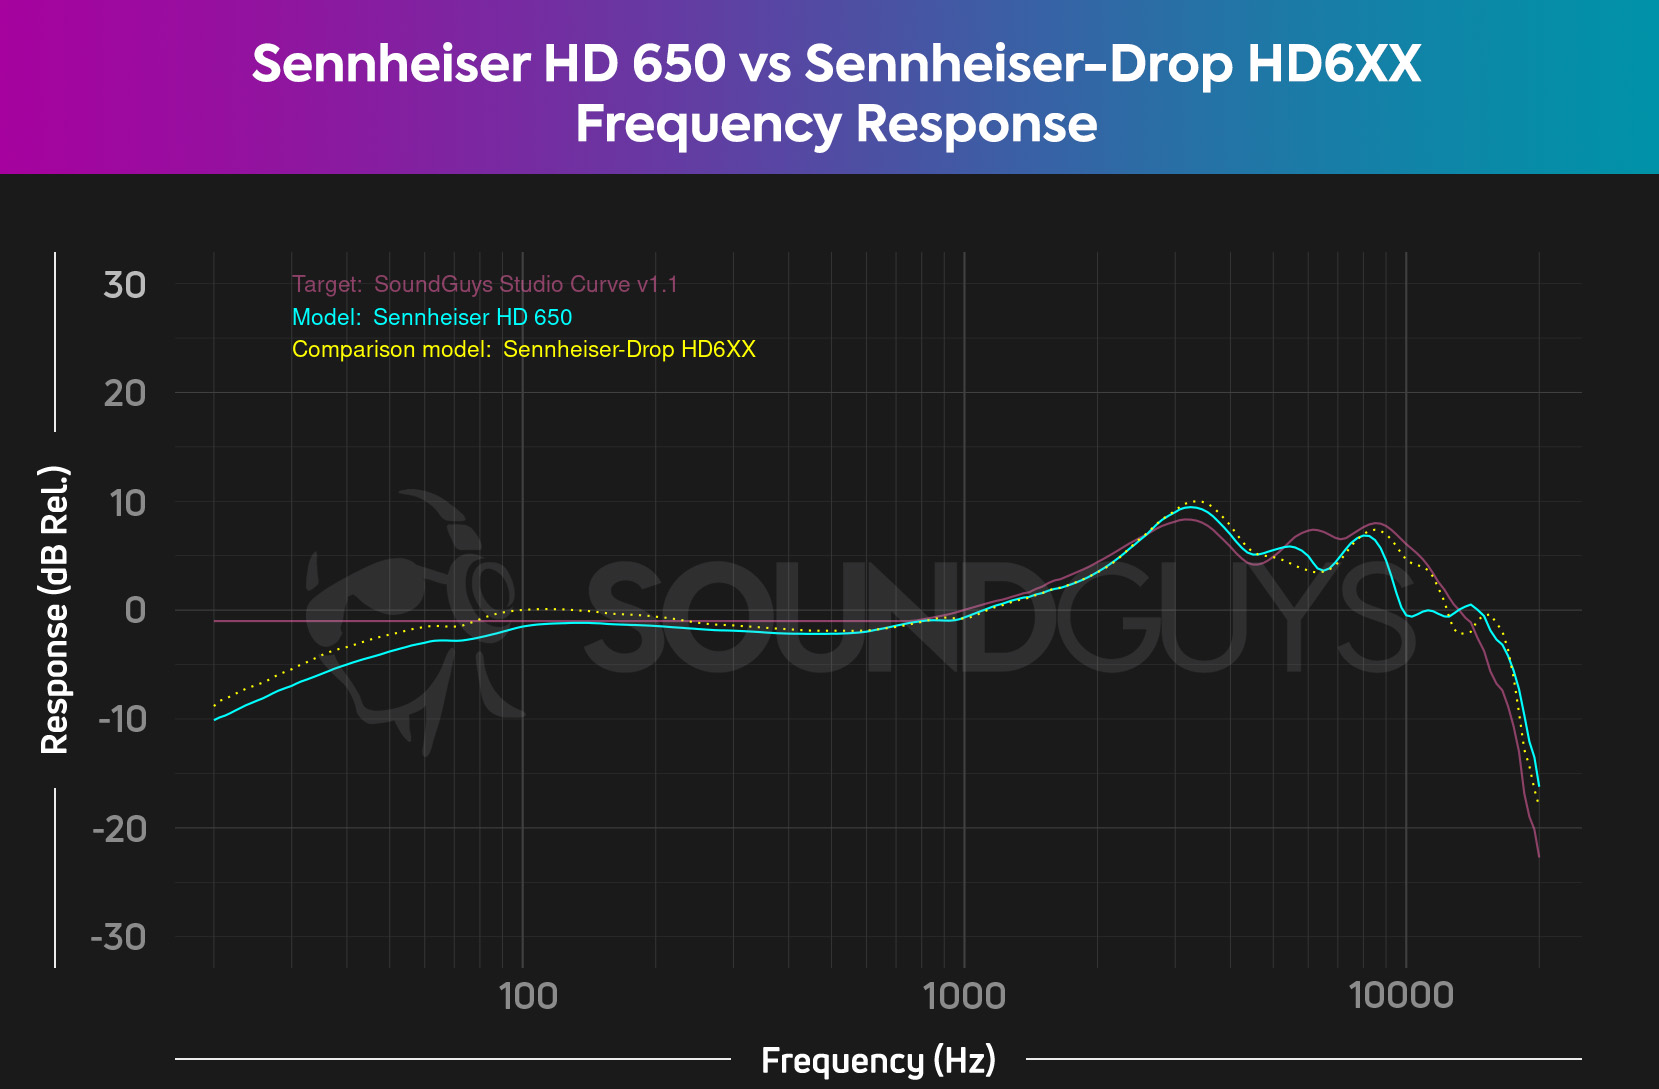 Sennheiser HD 650-vs-Sennheiser-Drop HD6XX frequency response